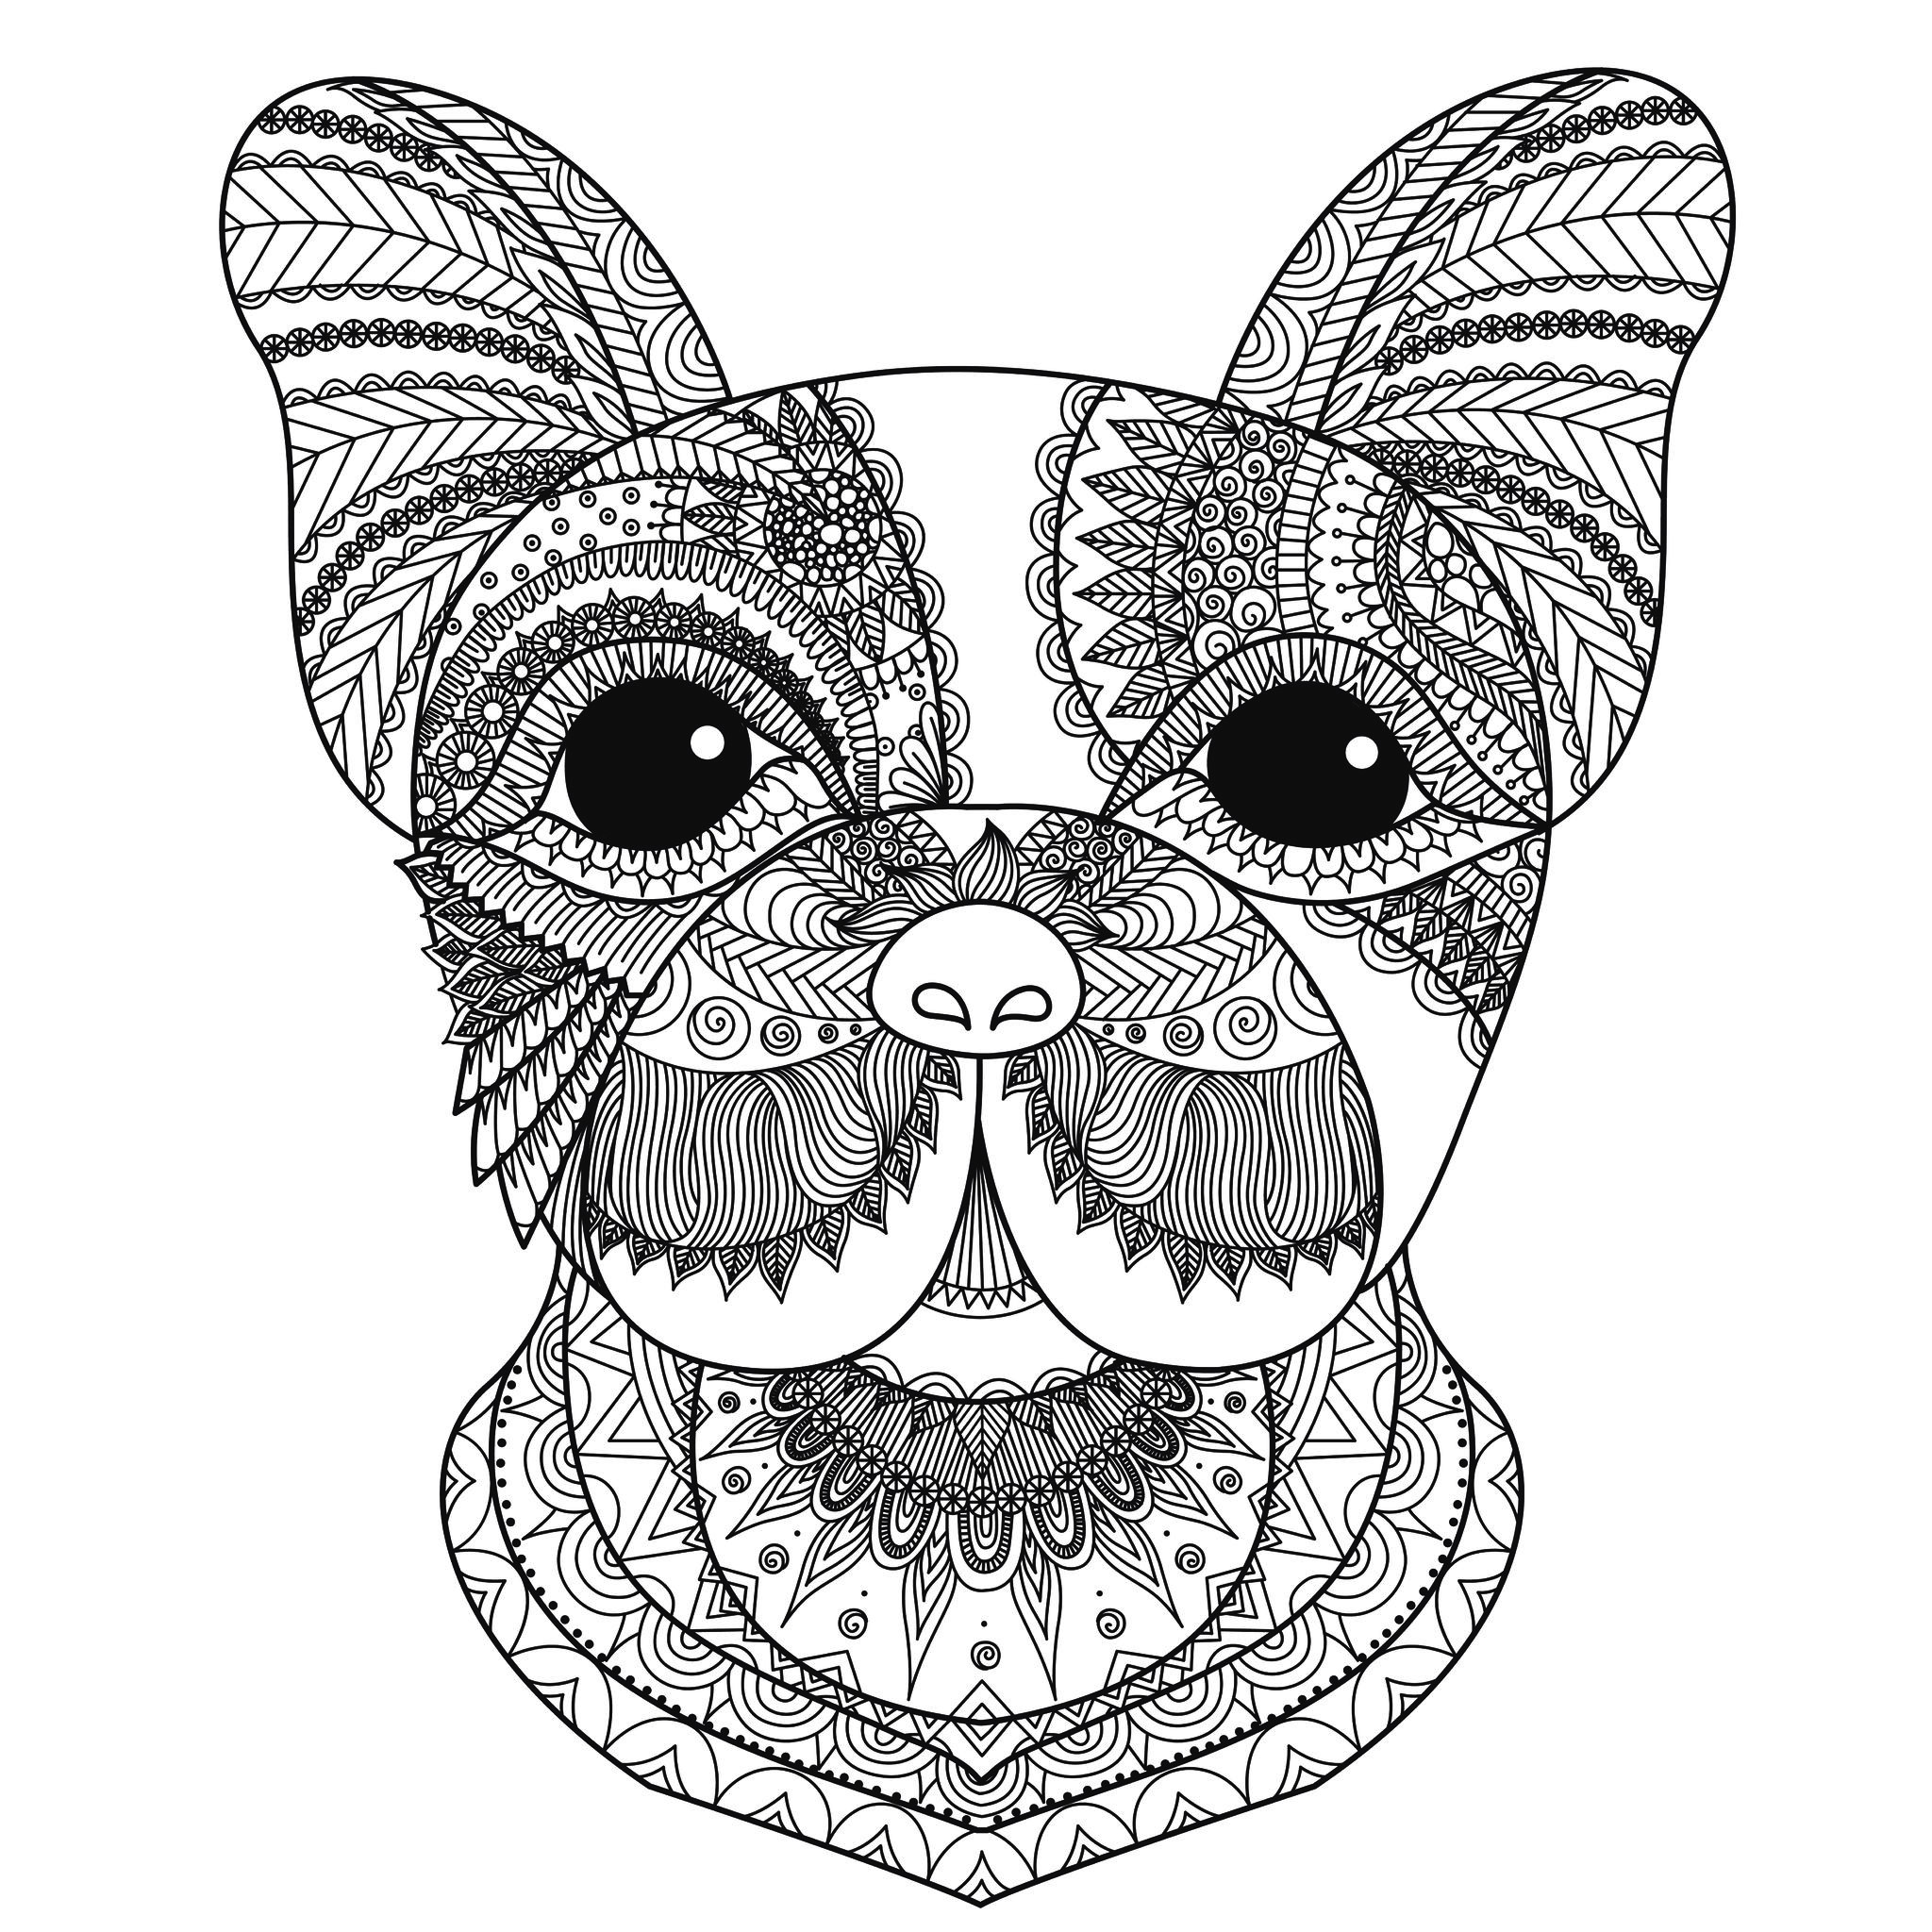 Desenhos simples para colorir de Cães, Artista : Bimdeedee   Fonte : 123rf